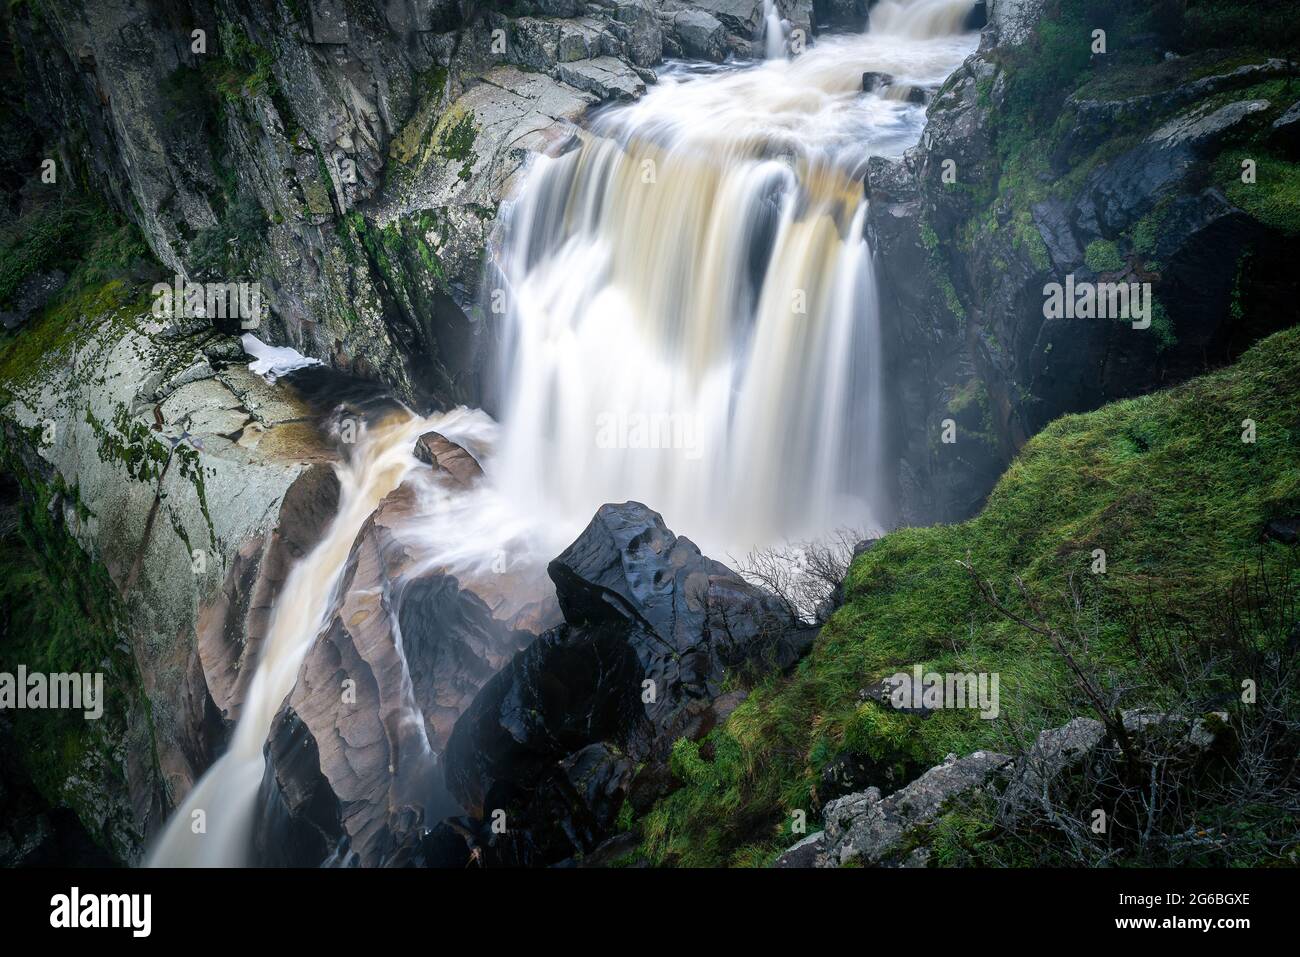 Waterfall of Pozo de los Humos, Salamanca province, Spain Stock Photo